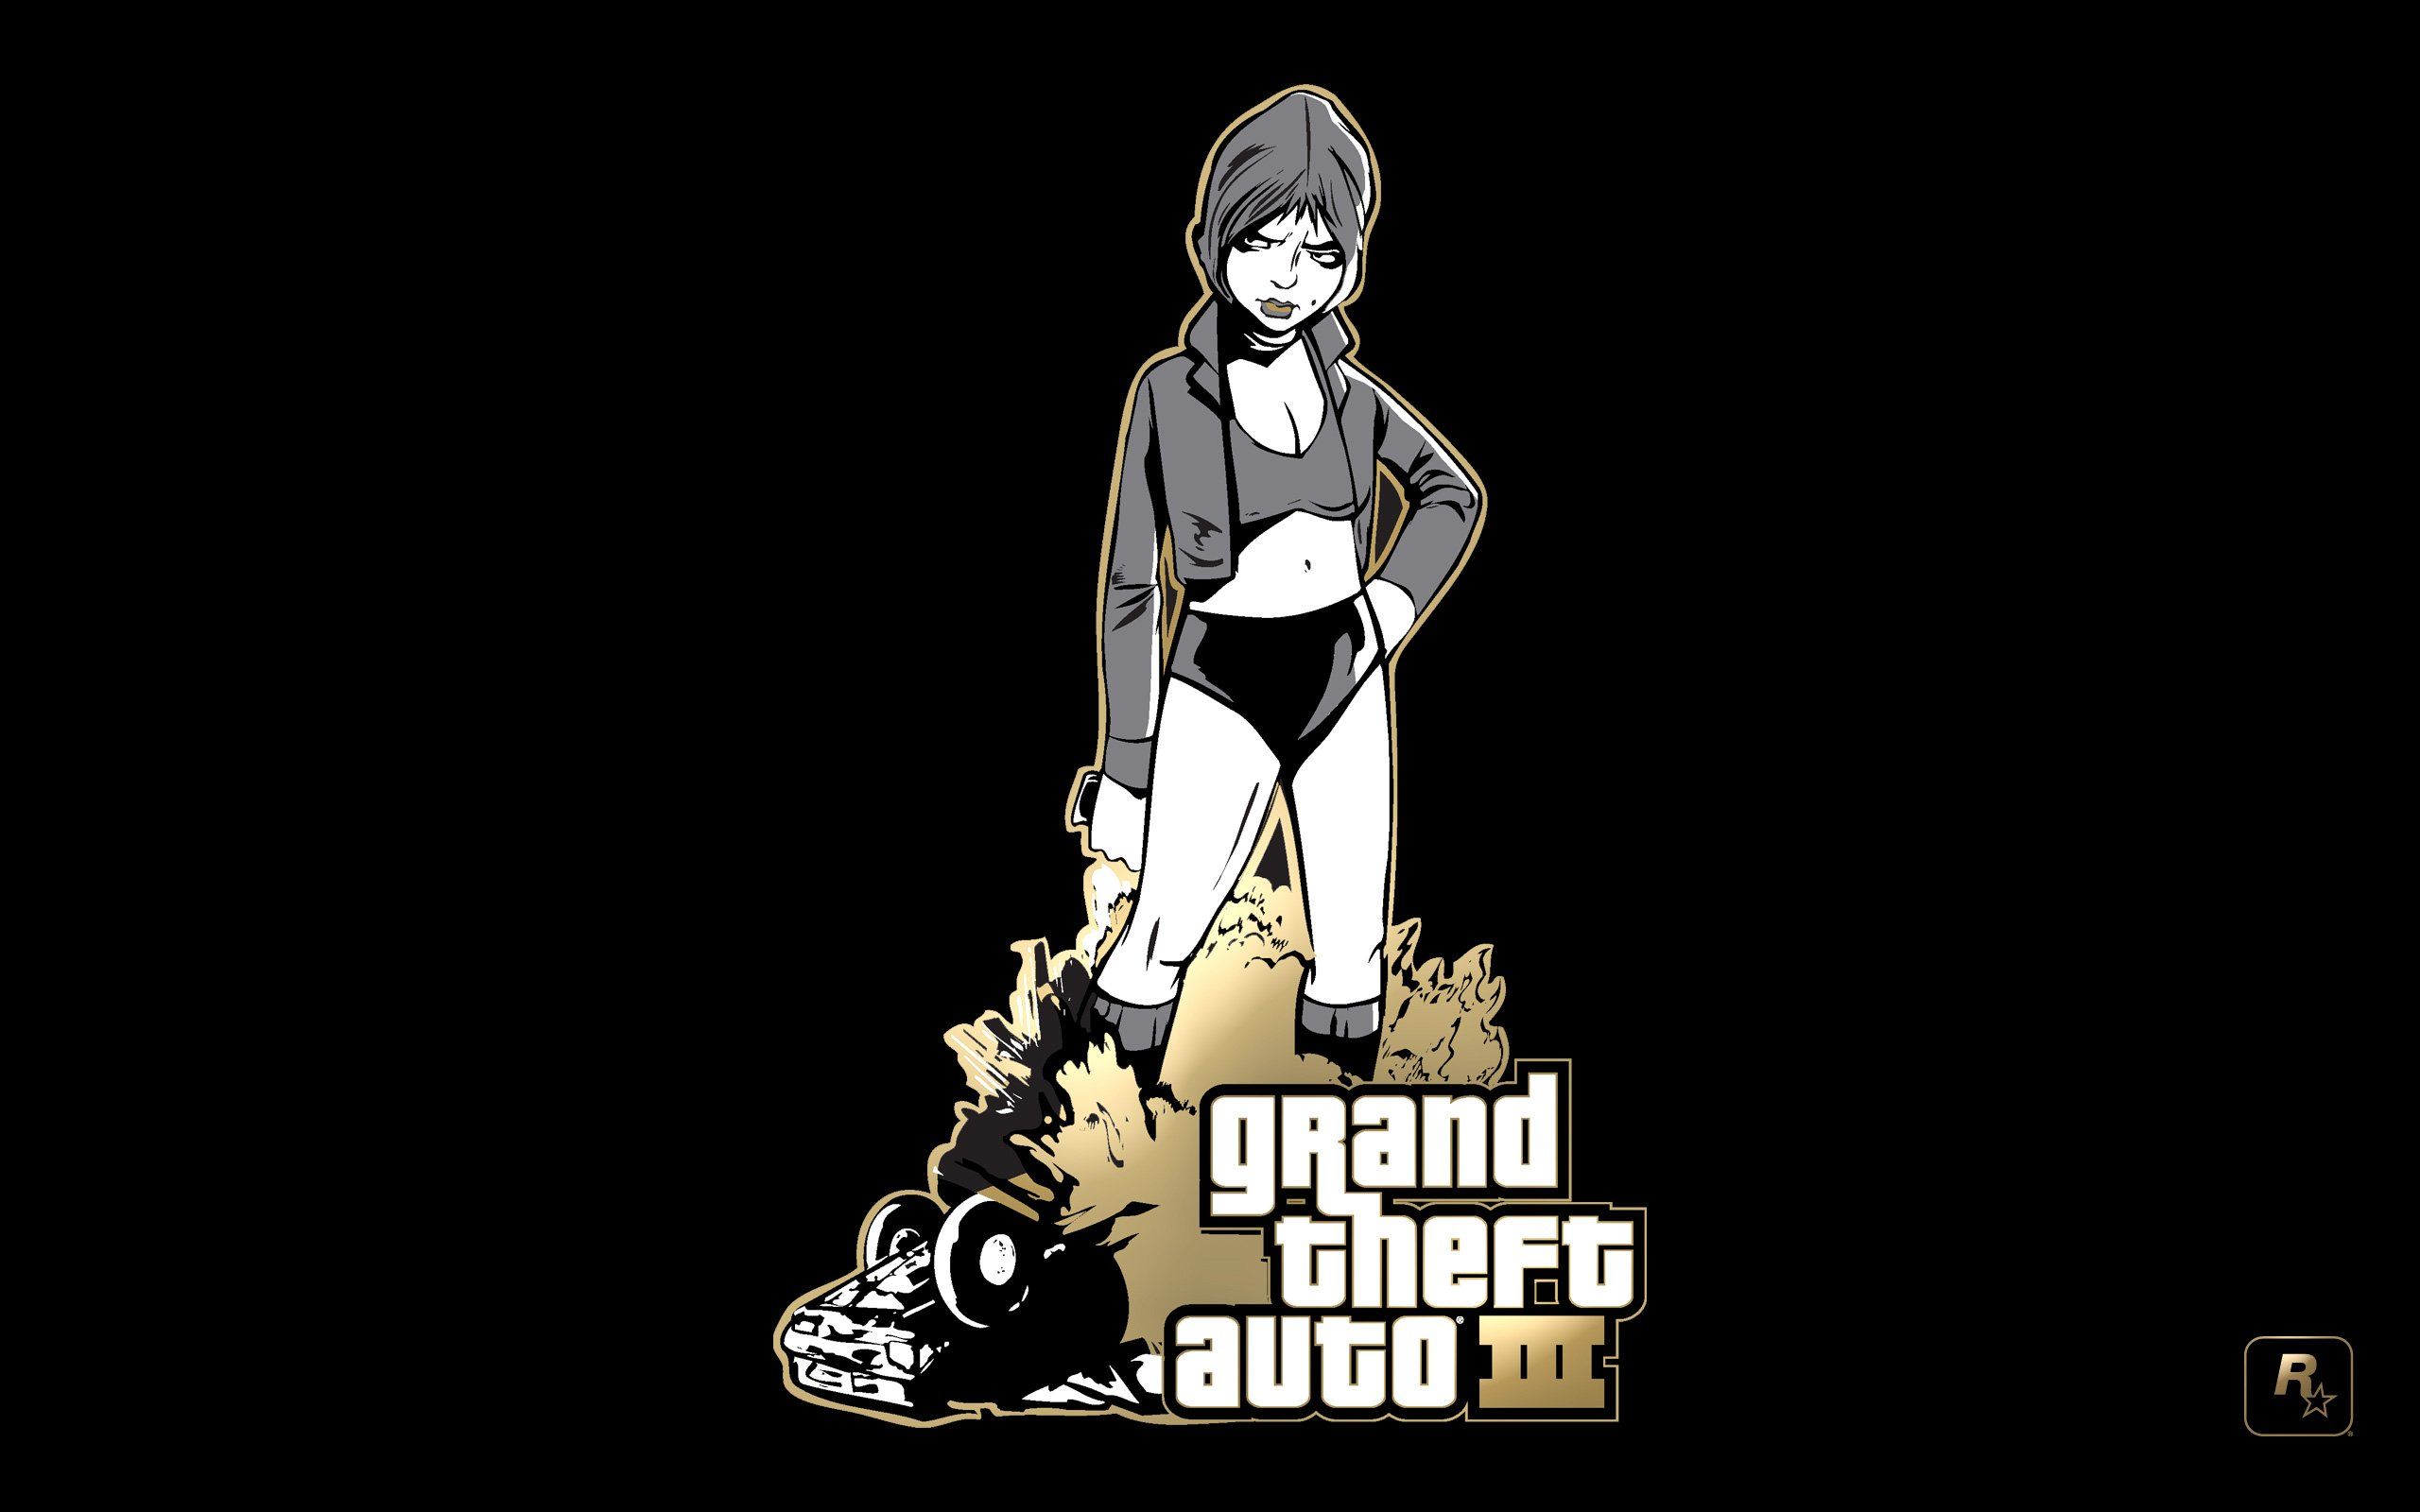 GTA Grand Theft Auto III Misty wallpaperx1600